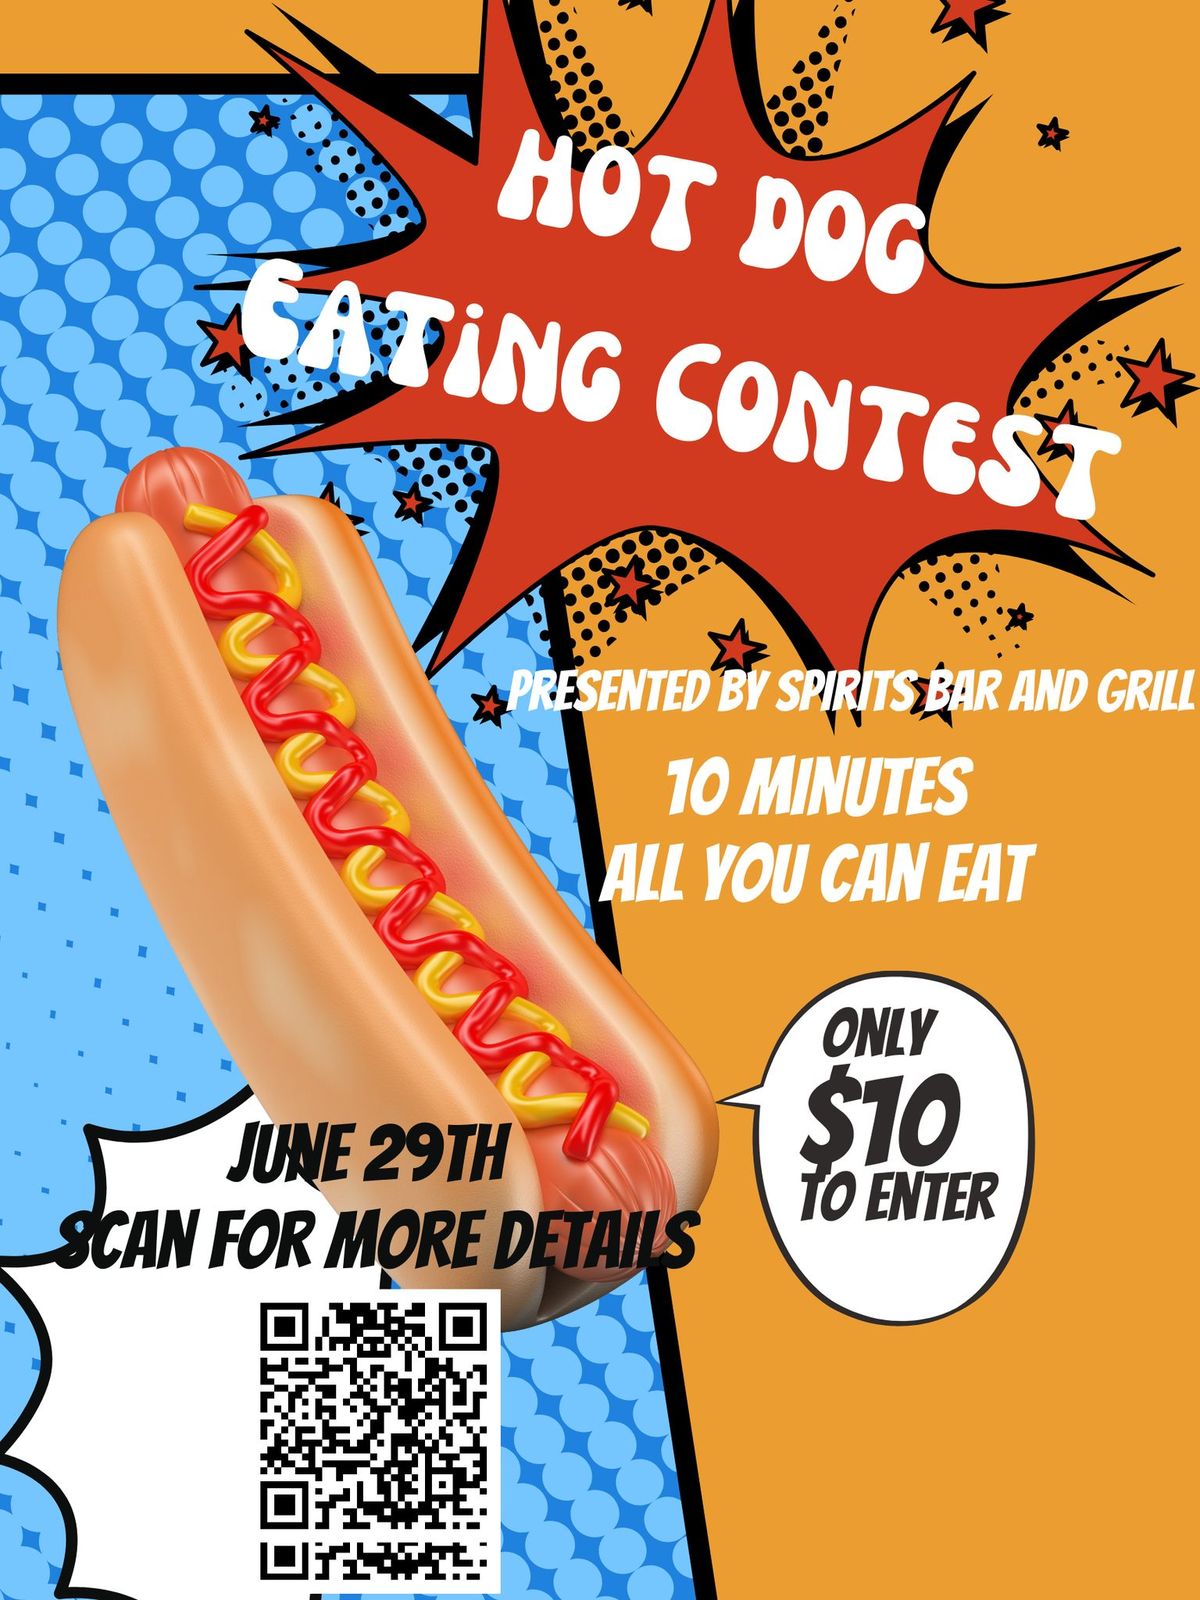 Spirits Inagural Hotdog Eating Contest